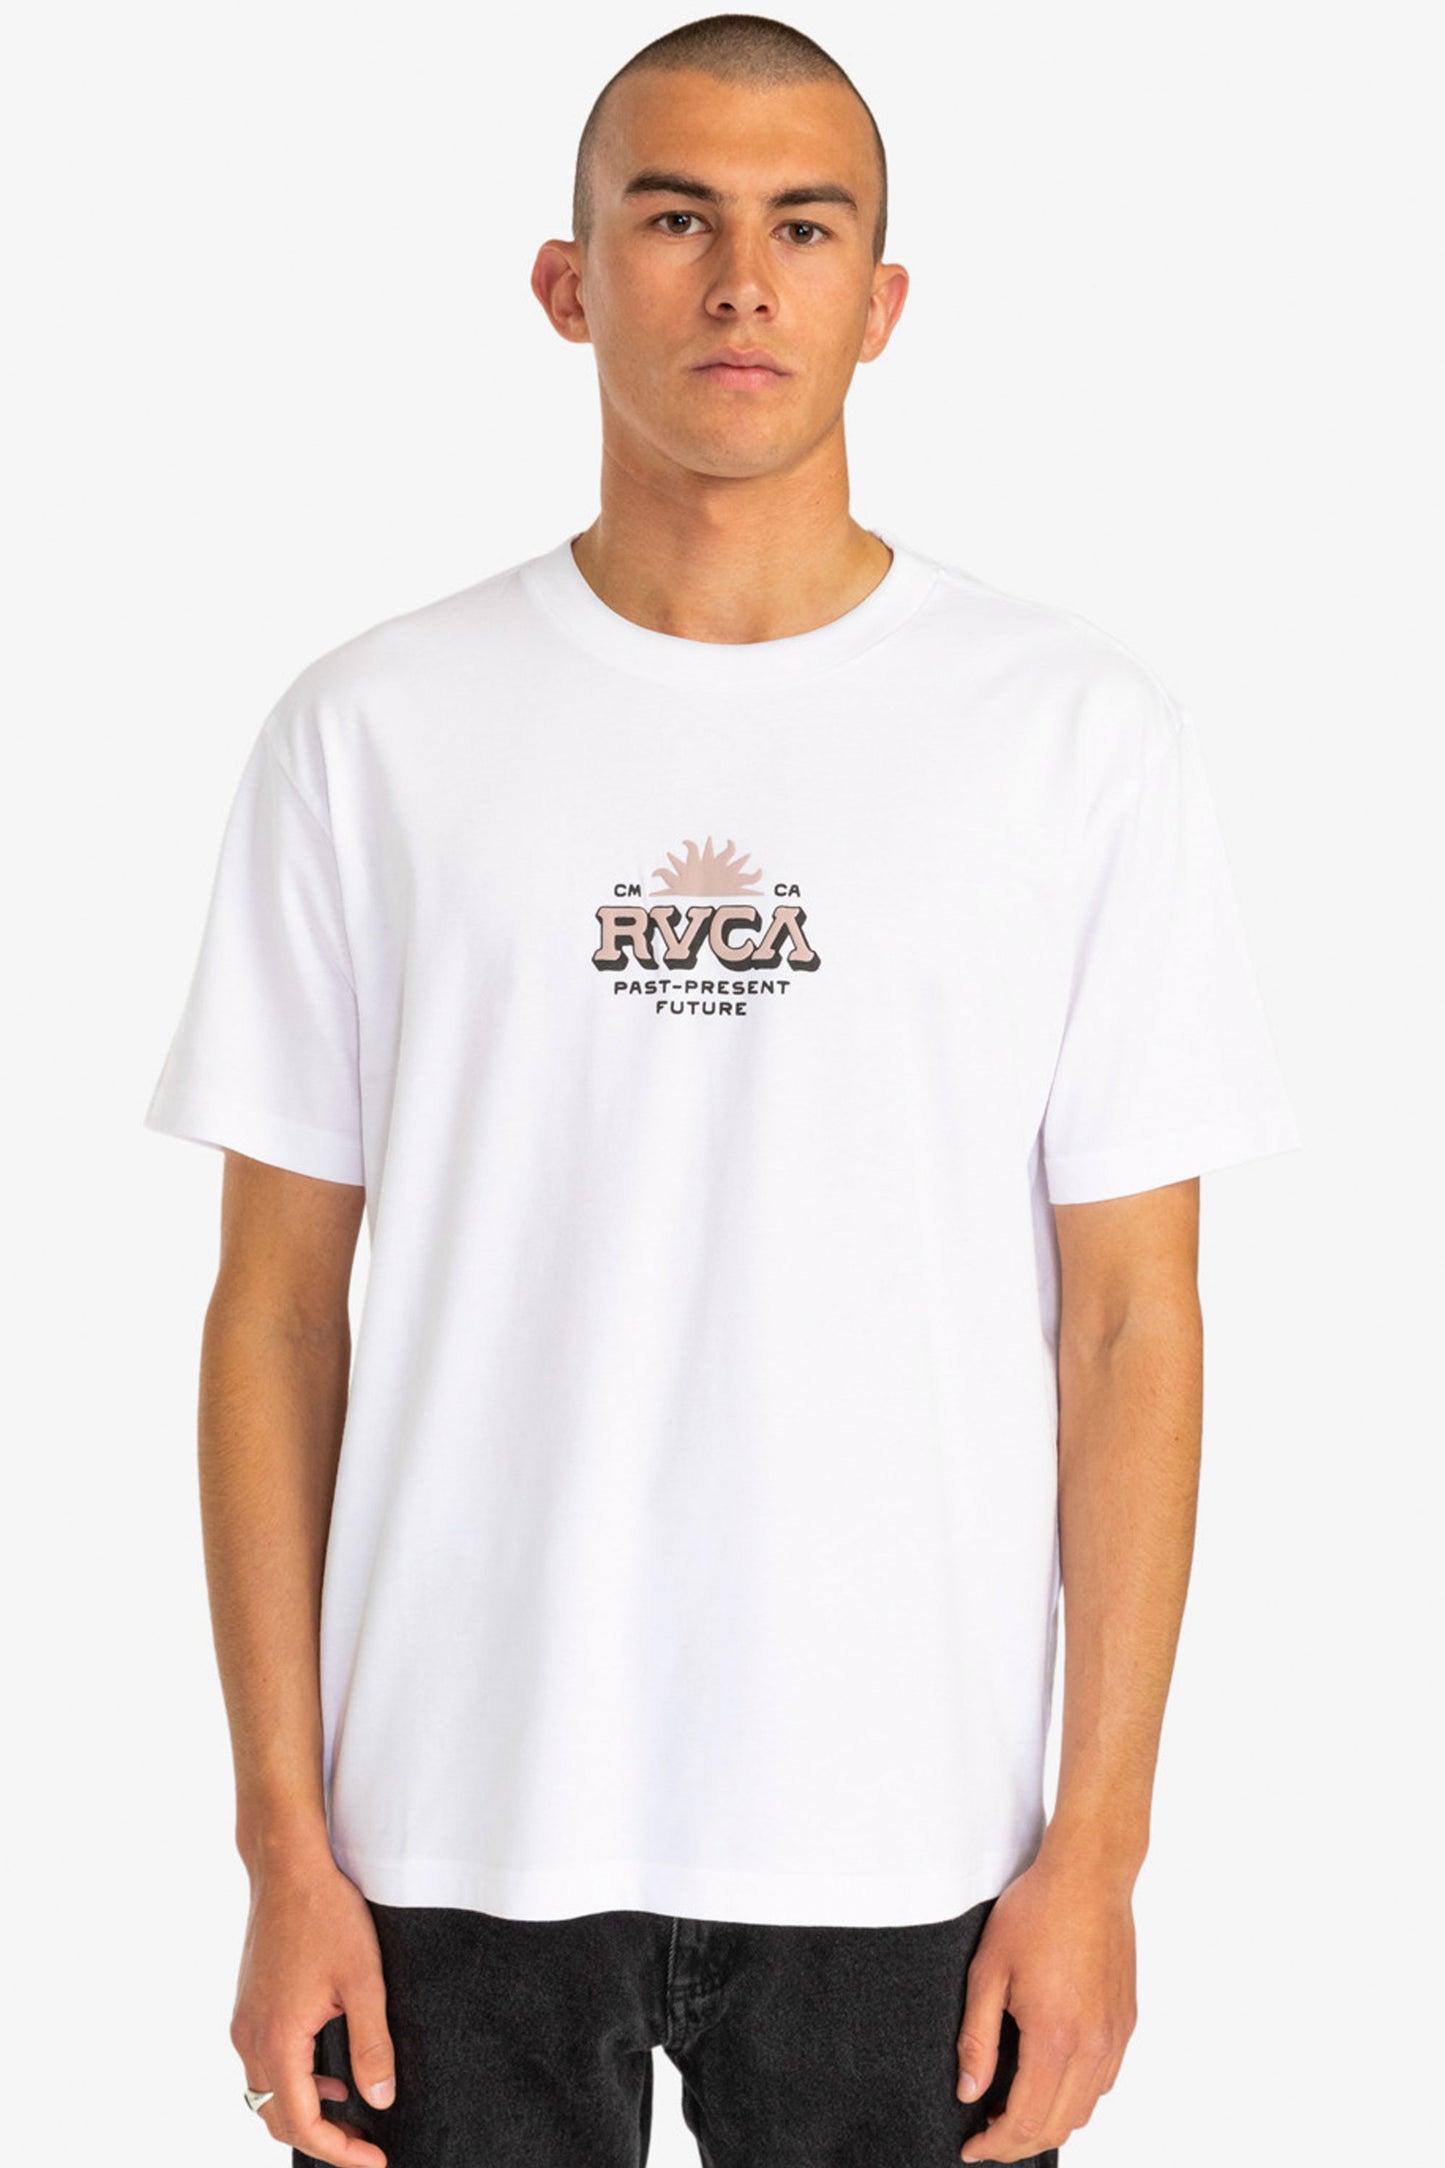 RVCA Clothing for MEN  Shop online at PUKAS SURF SHOP